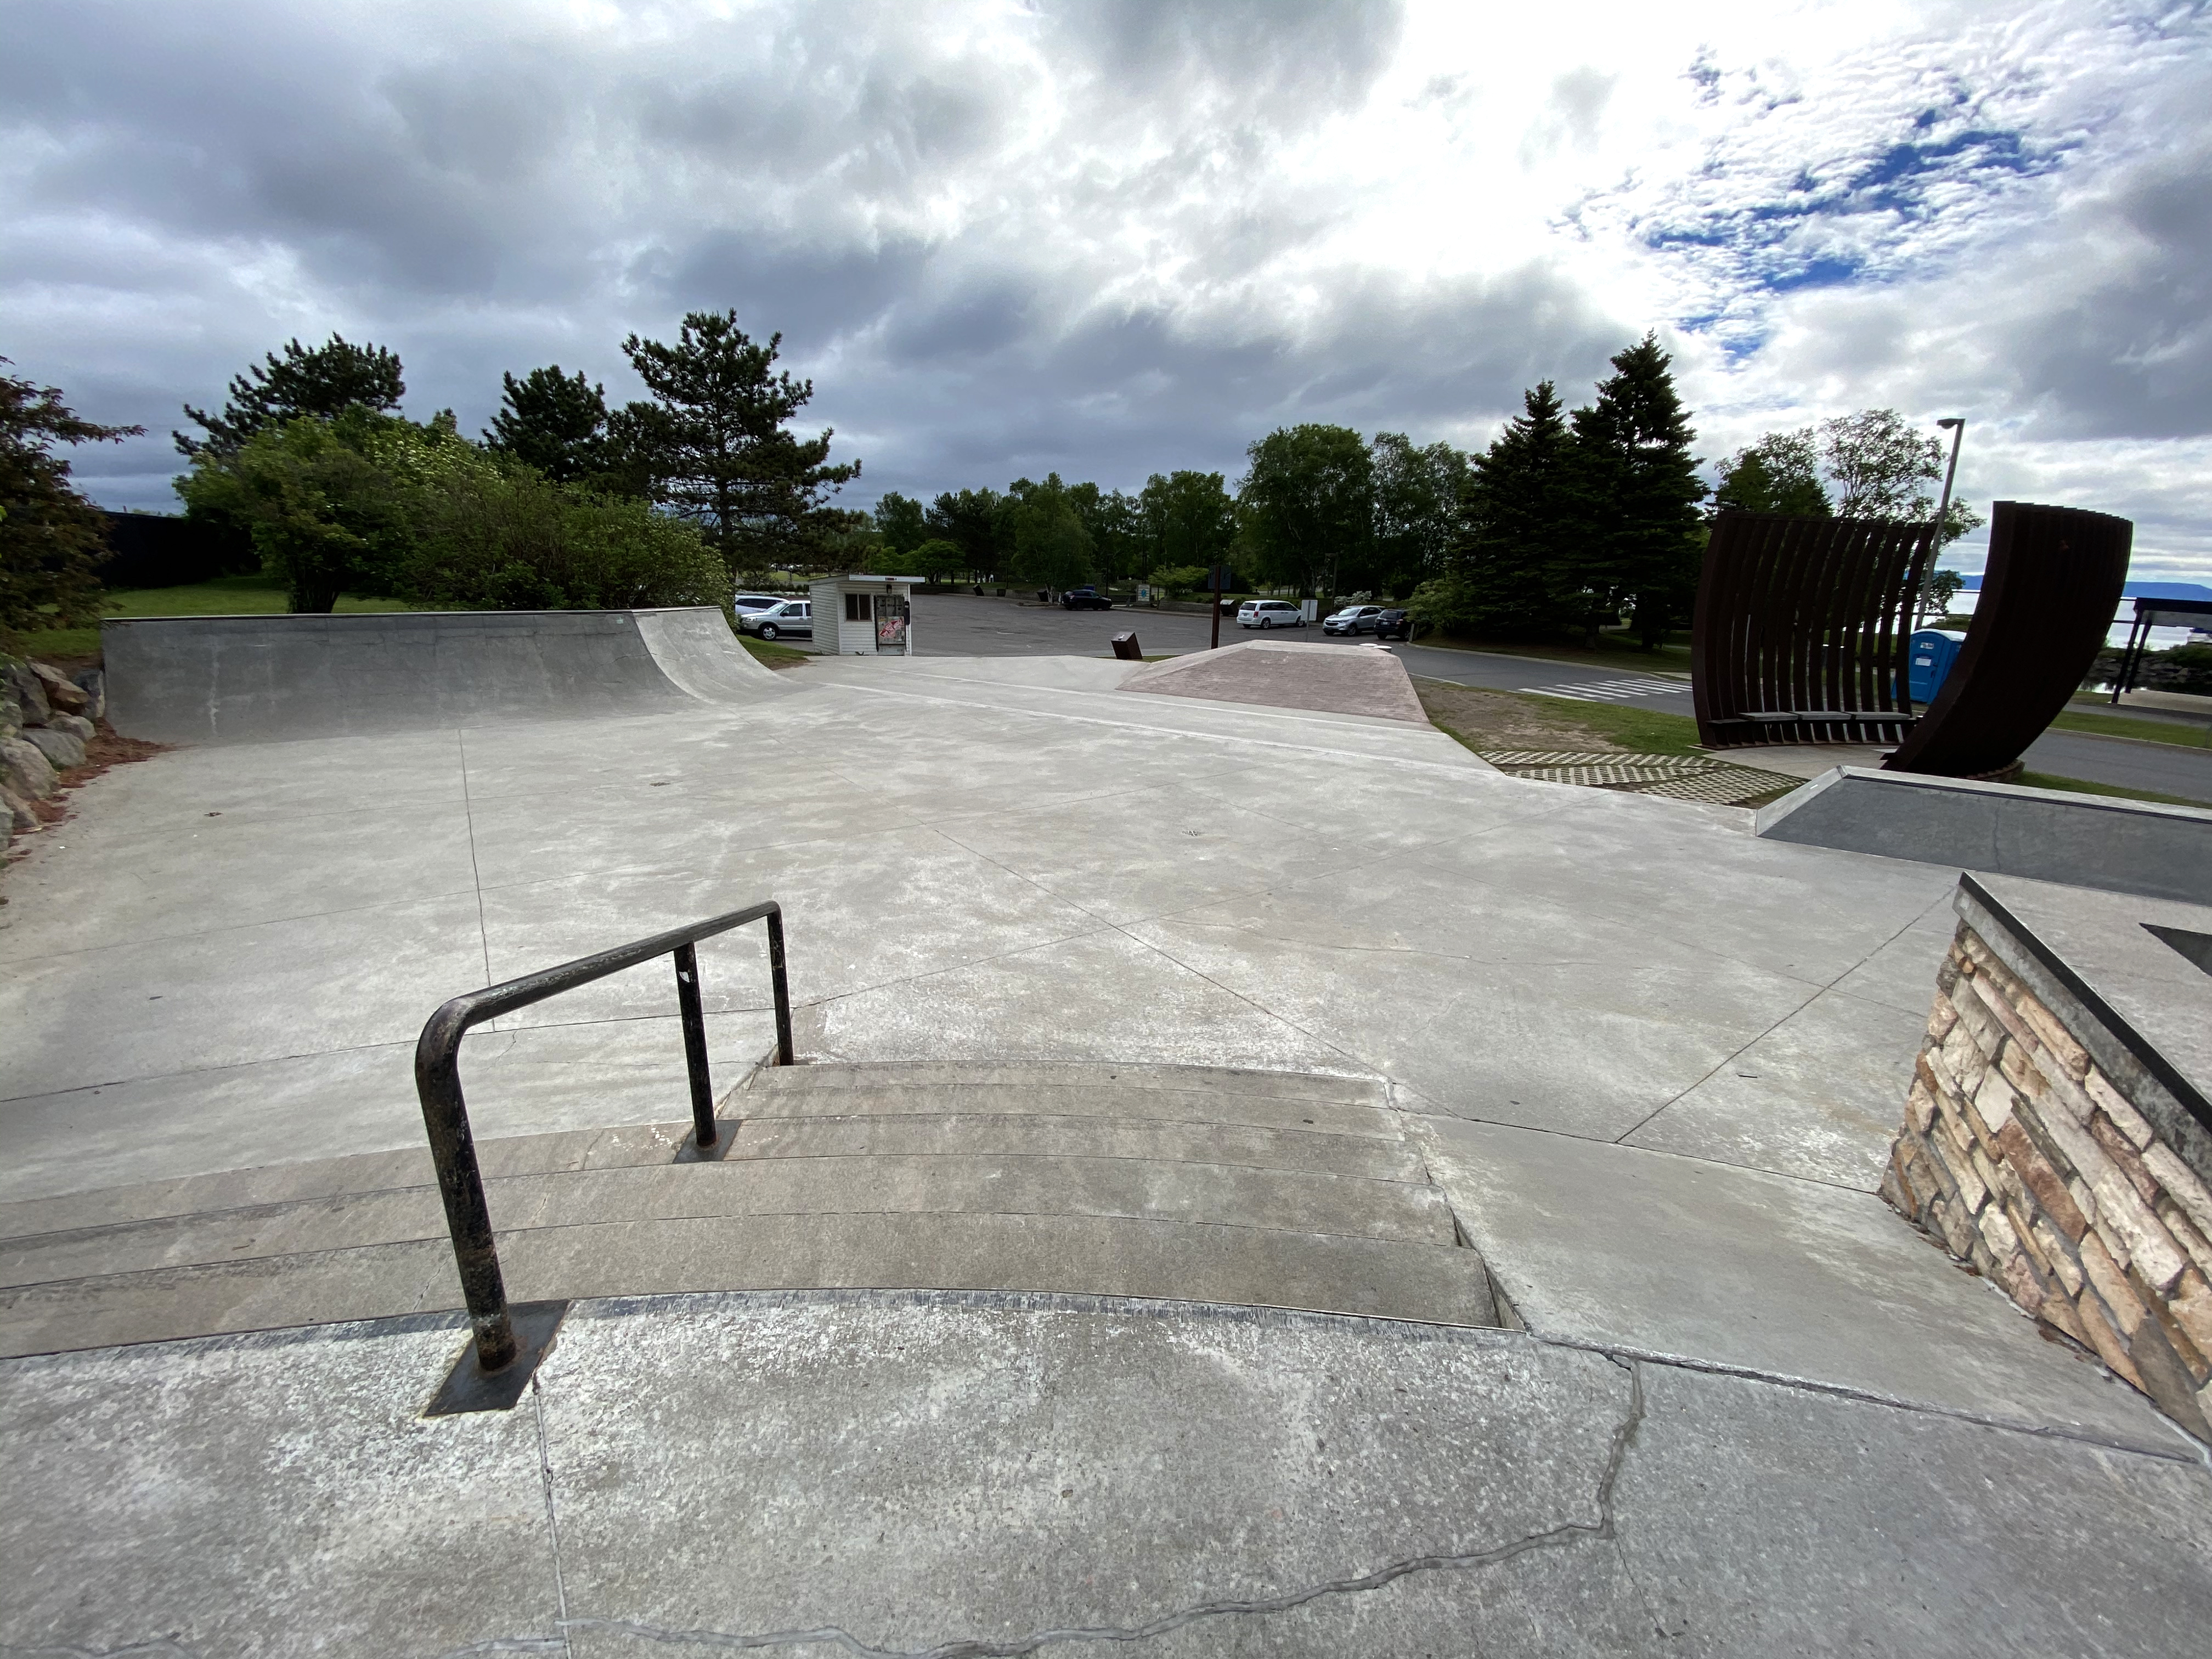 Thunder Bay marina plaza skatepark in ontario